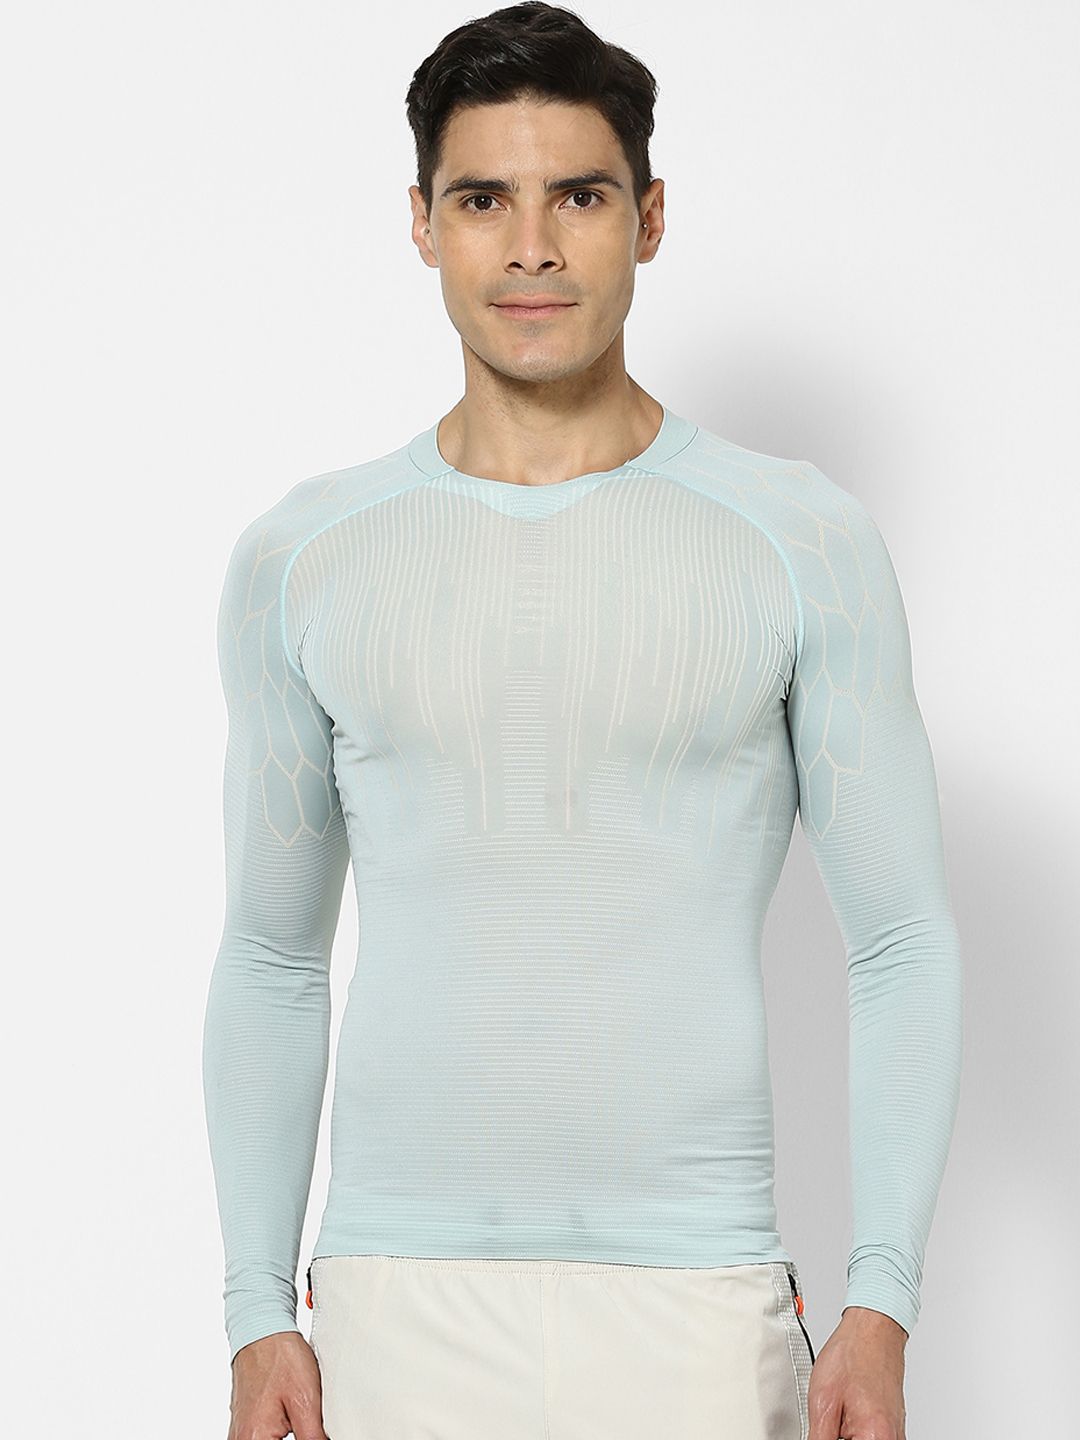 Kipsta By Decathlon Unisex Blue Solid Round Neck T-shirt Price in India